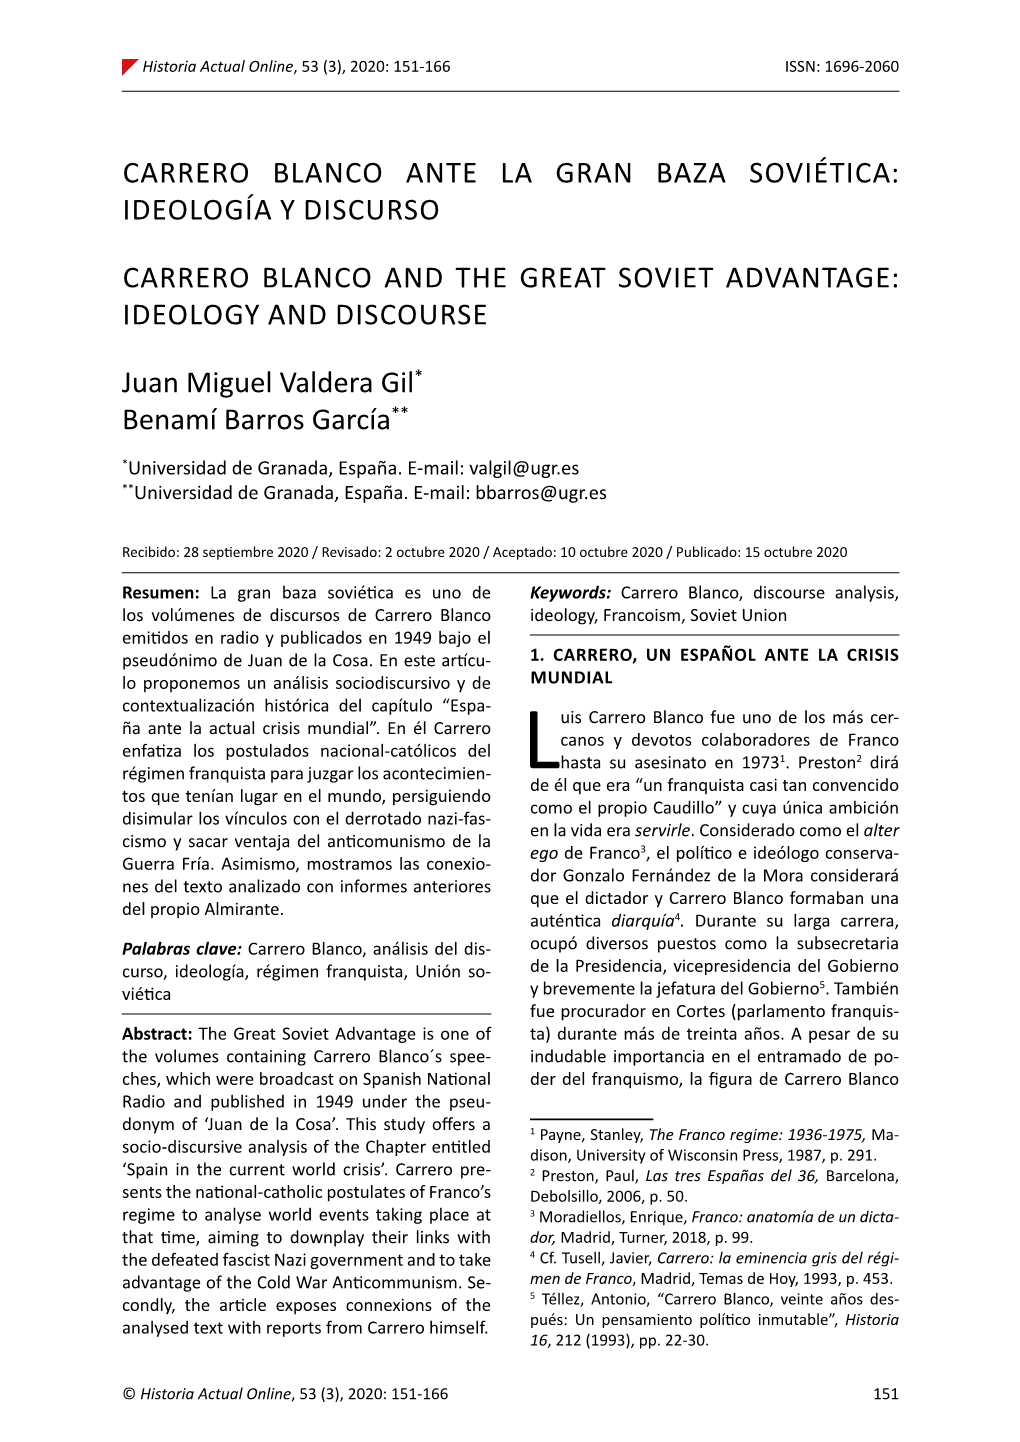 Carrero Blanco Ante La Gran Baza Soviética: Ideología Y Discurso